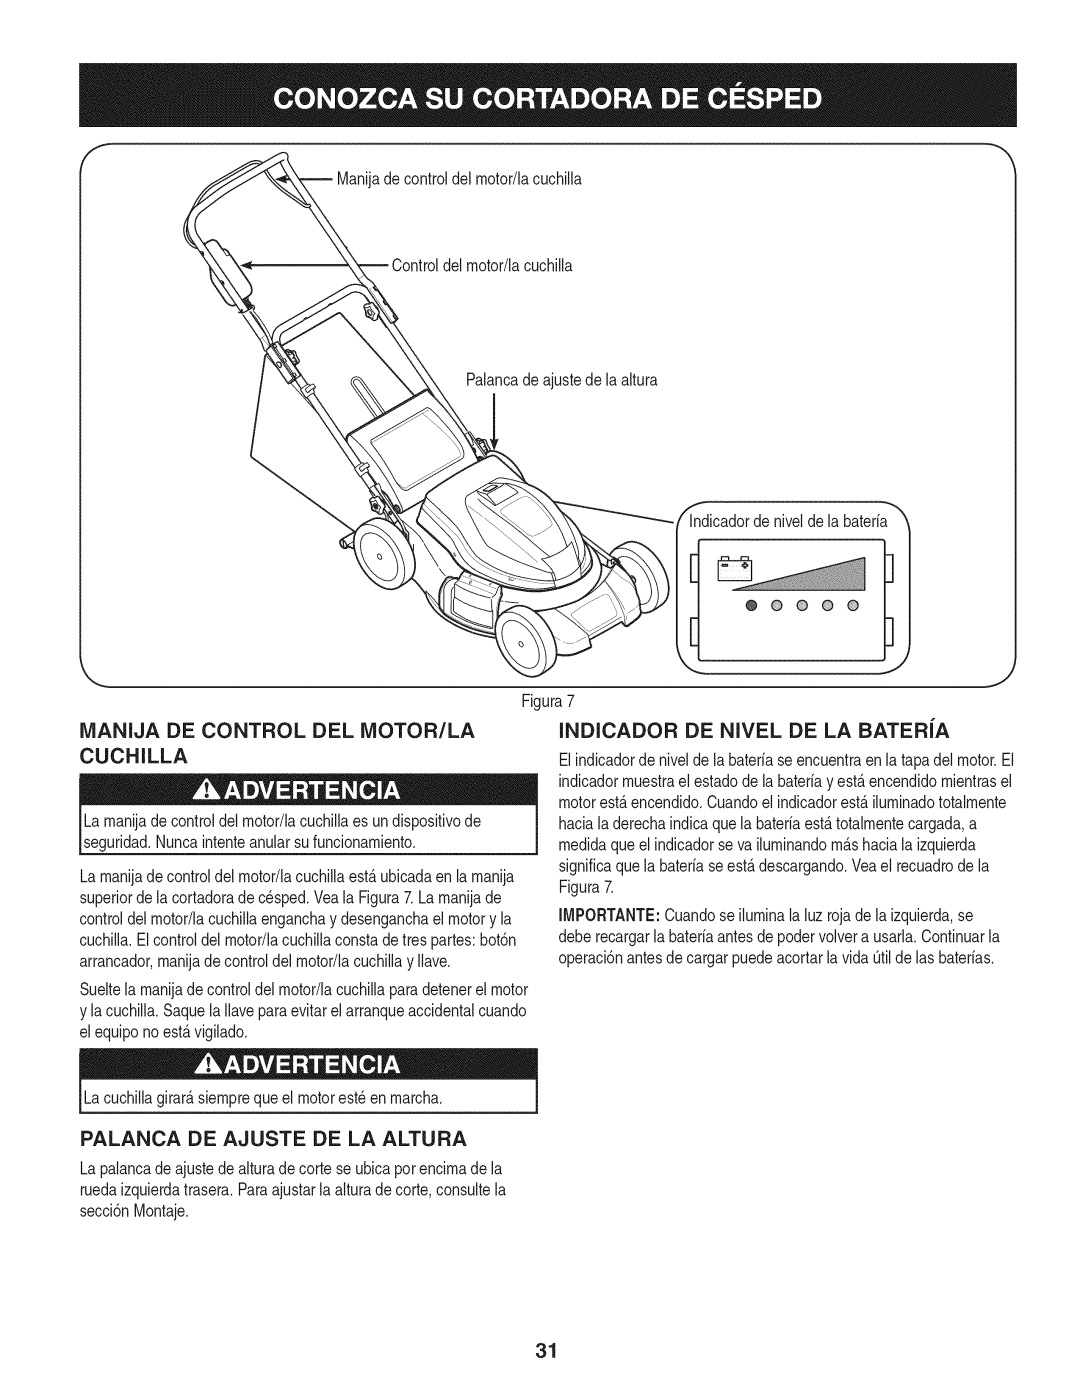 Craftsman 247.370480 manual MANIJA DE CONTROL DEL iVIOTOR/LA, Cuchilla, INDICADOR DE NIVEL DE LA BATERiA 